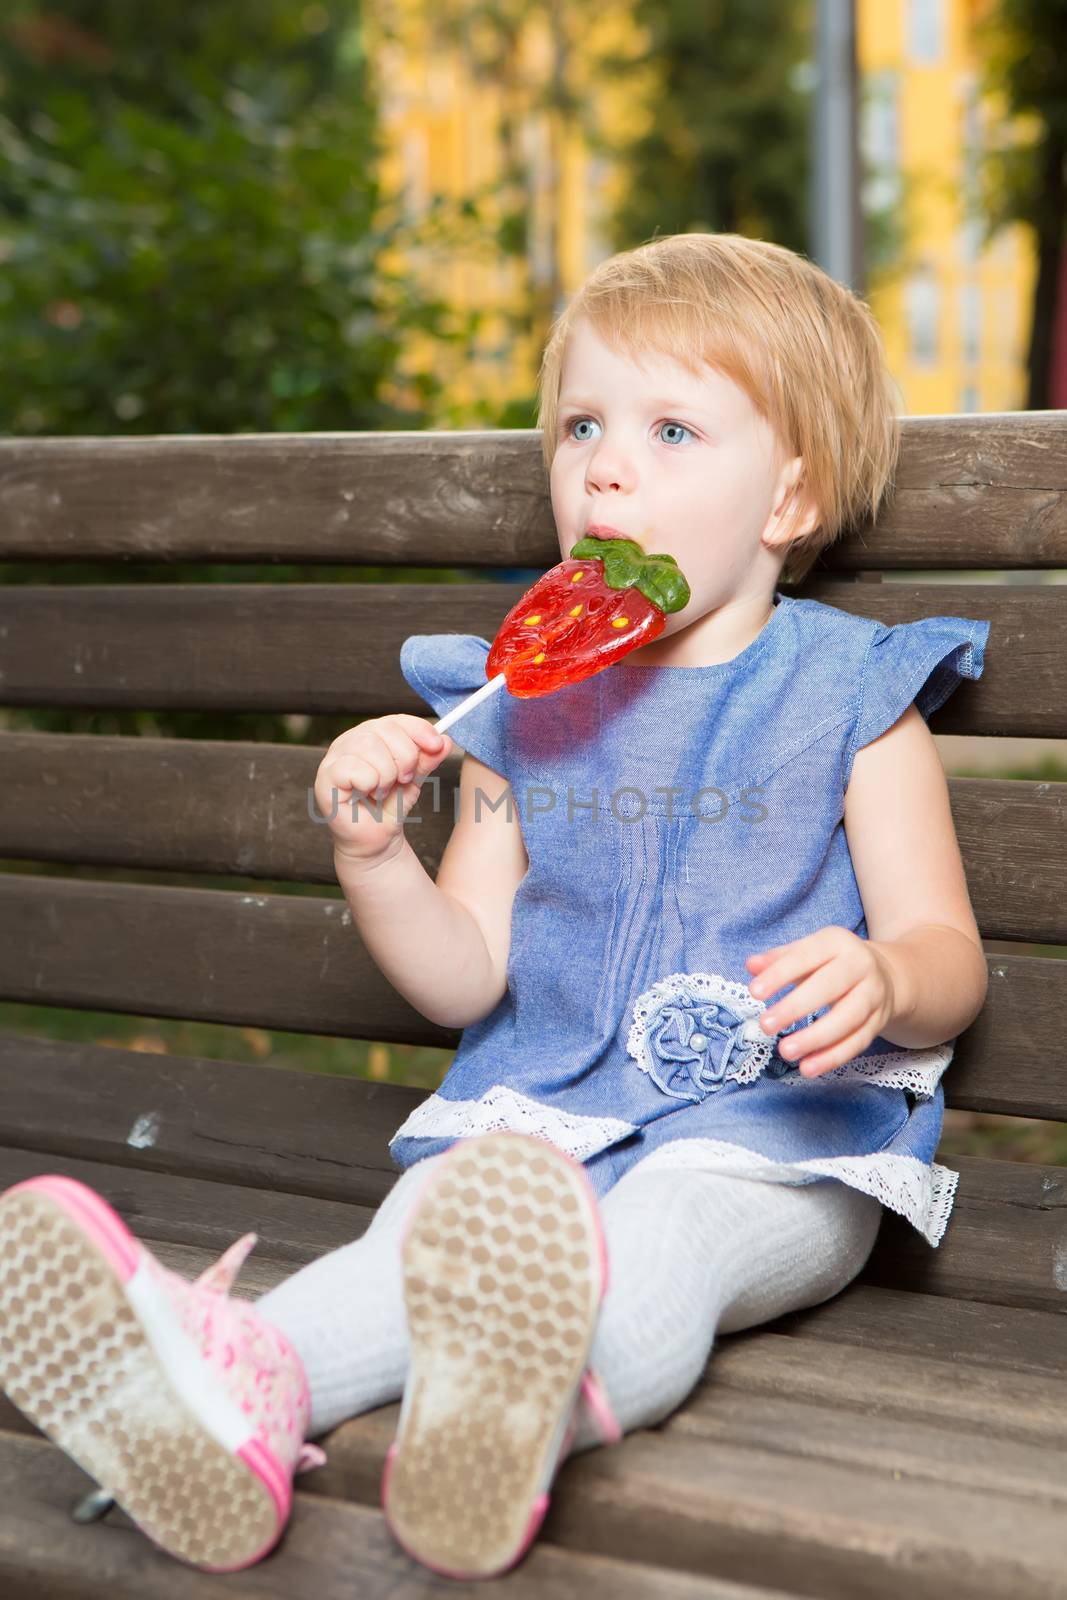 Beautiful little girl holding a big strawberry shaped lollipop